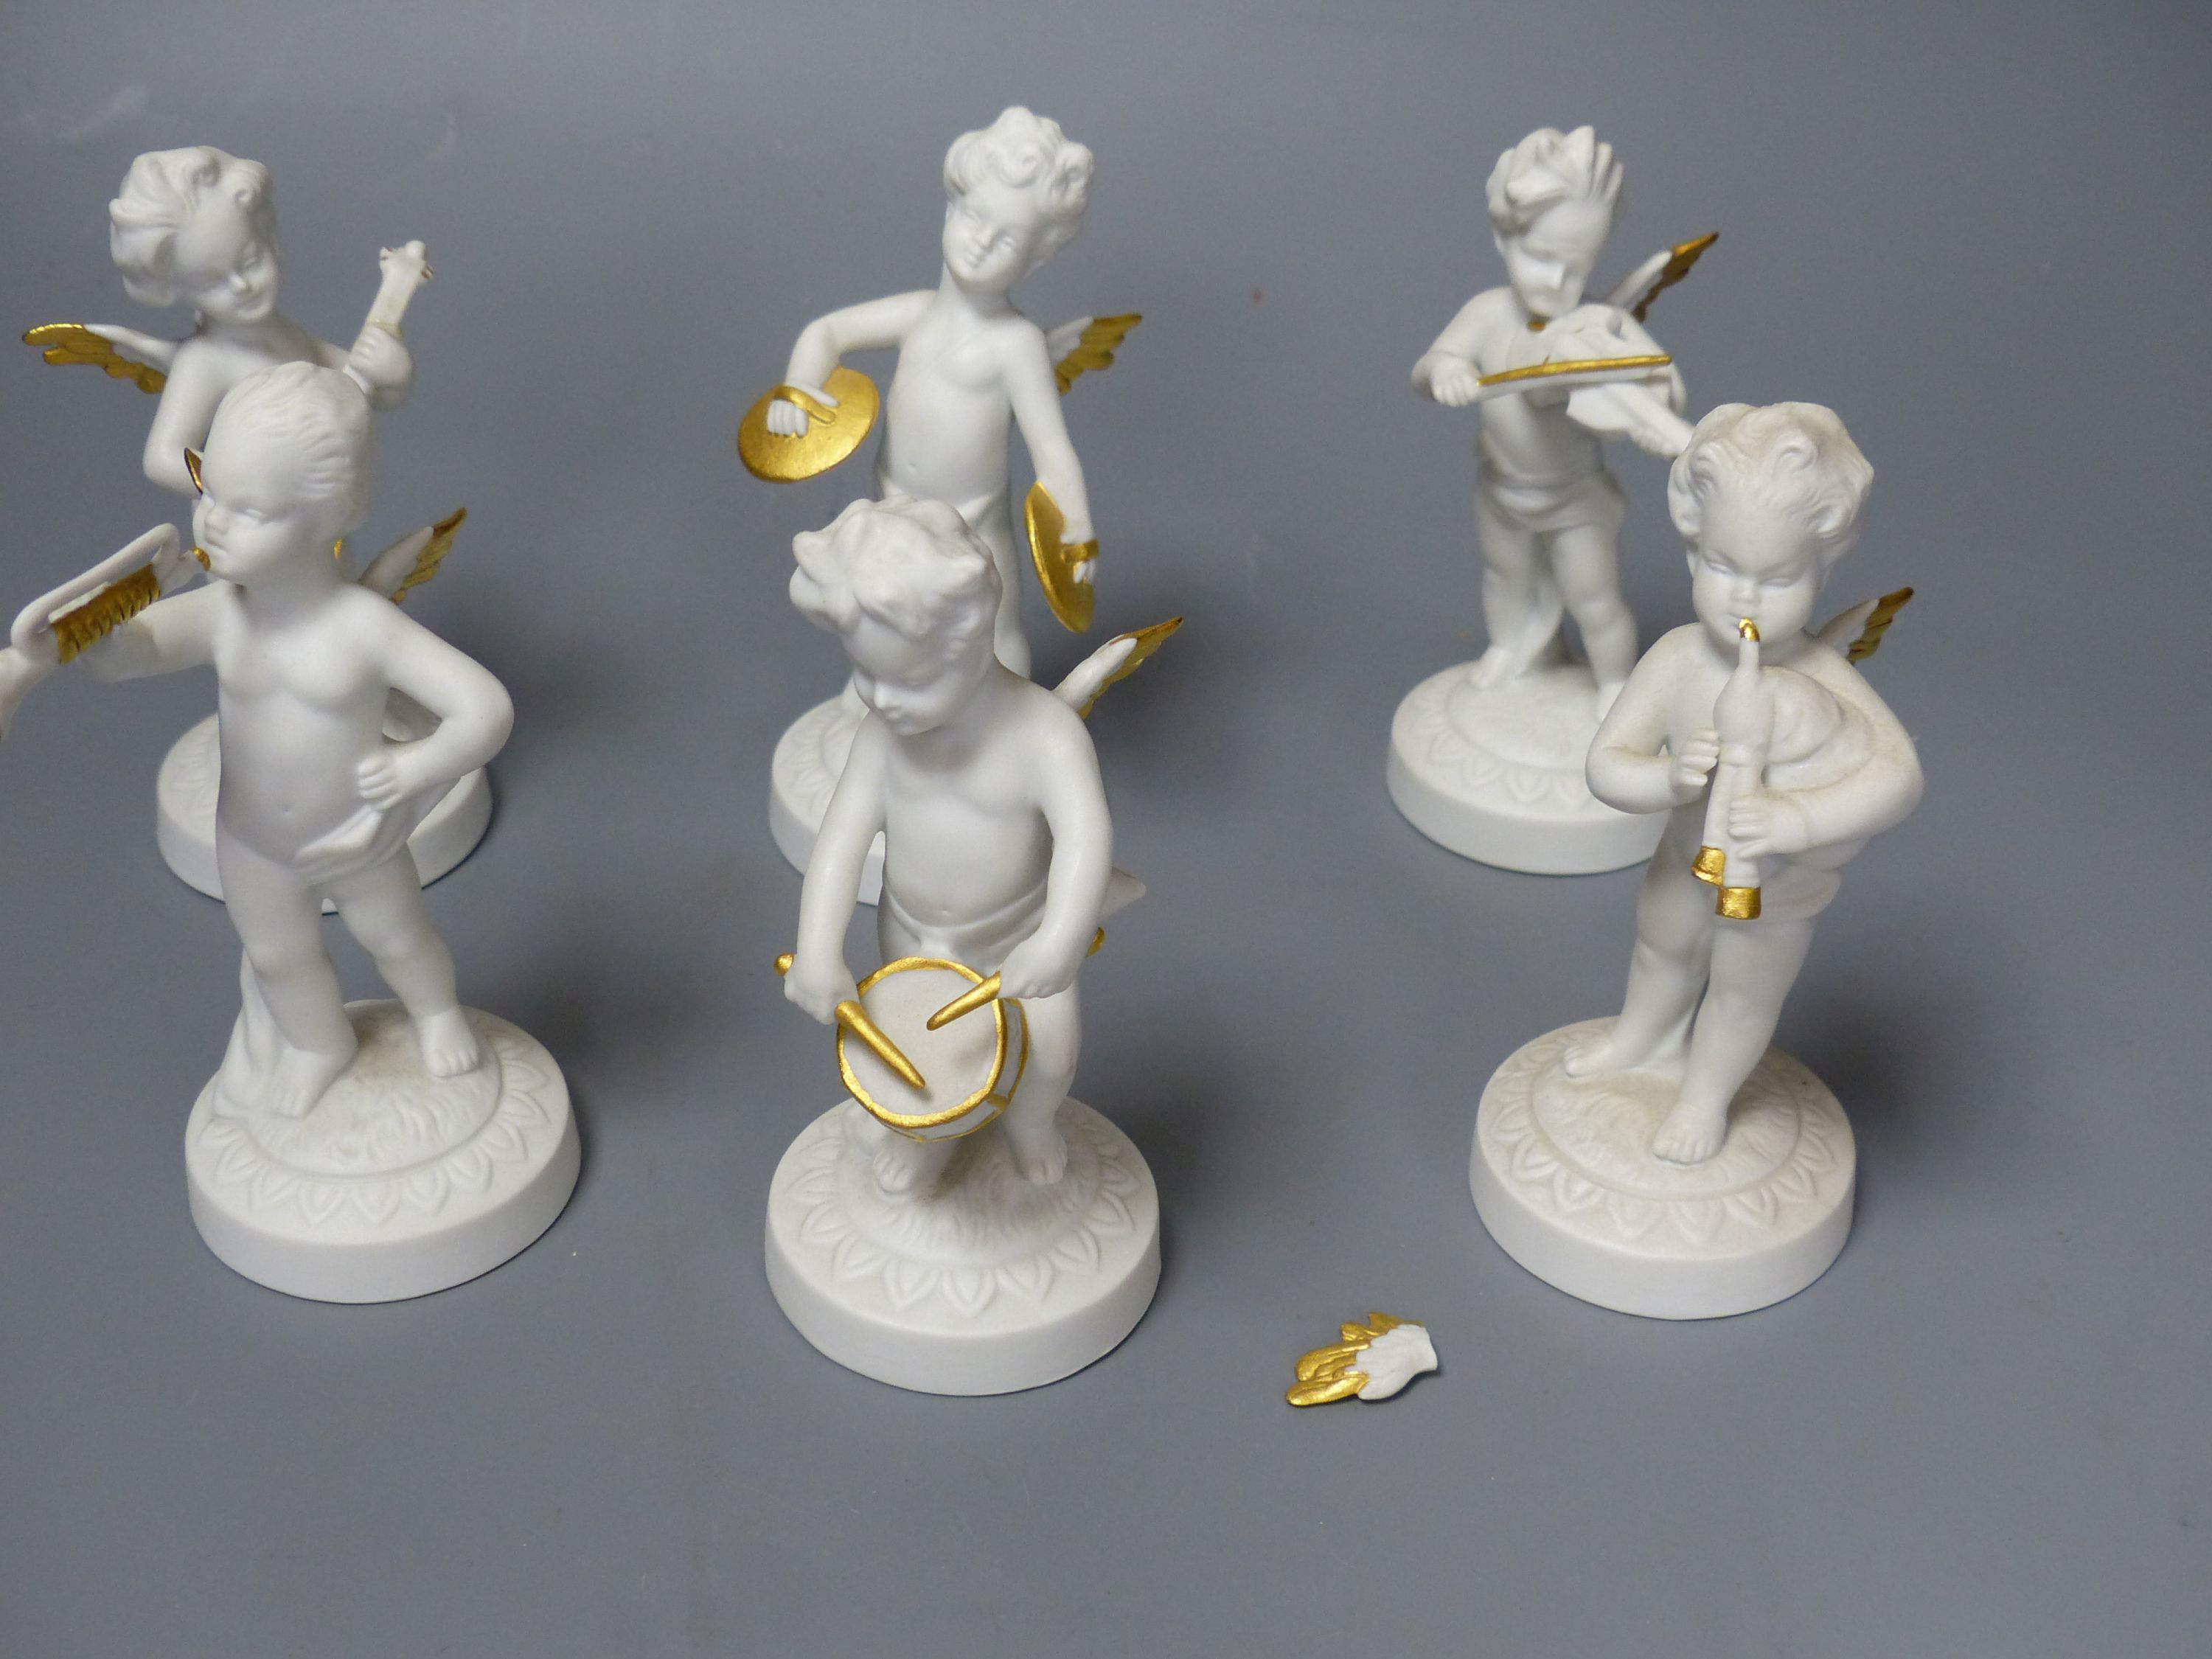 Six Continental porcelain cherubs with musical instruments, tallest 10cm